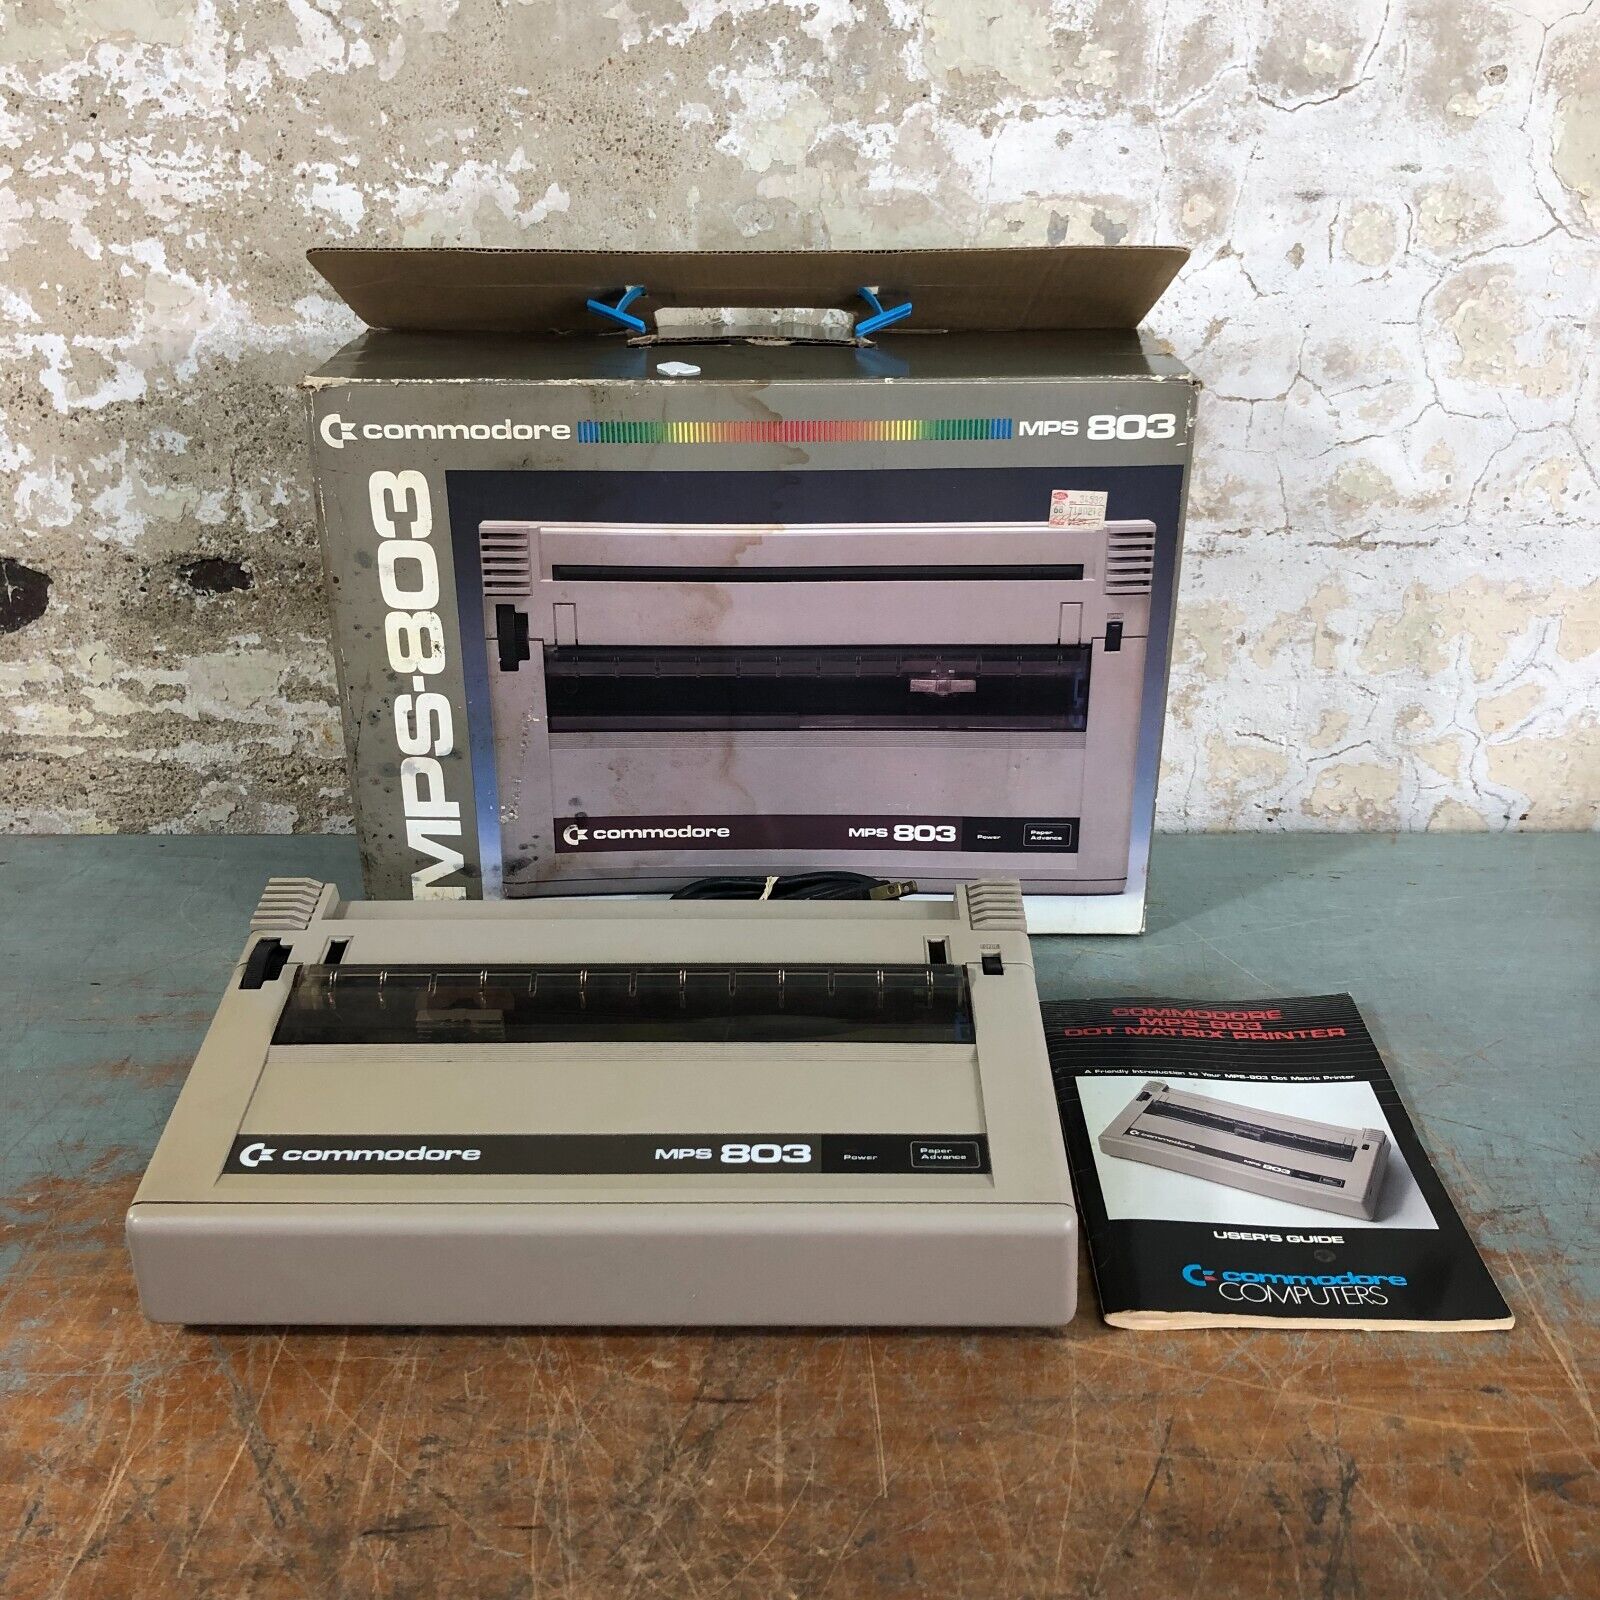 VINTAGE Commodore MPS-803 Dot Matrix Printer TESTED WORKING in Original Box